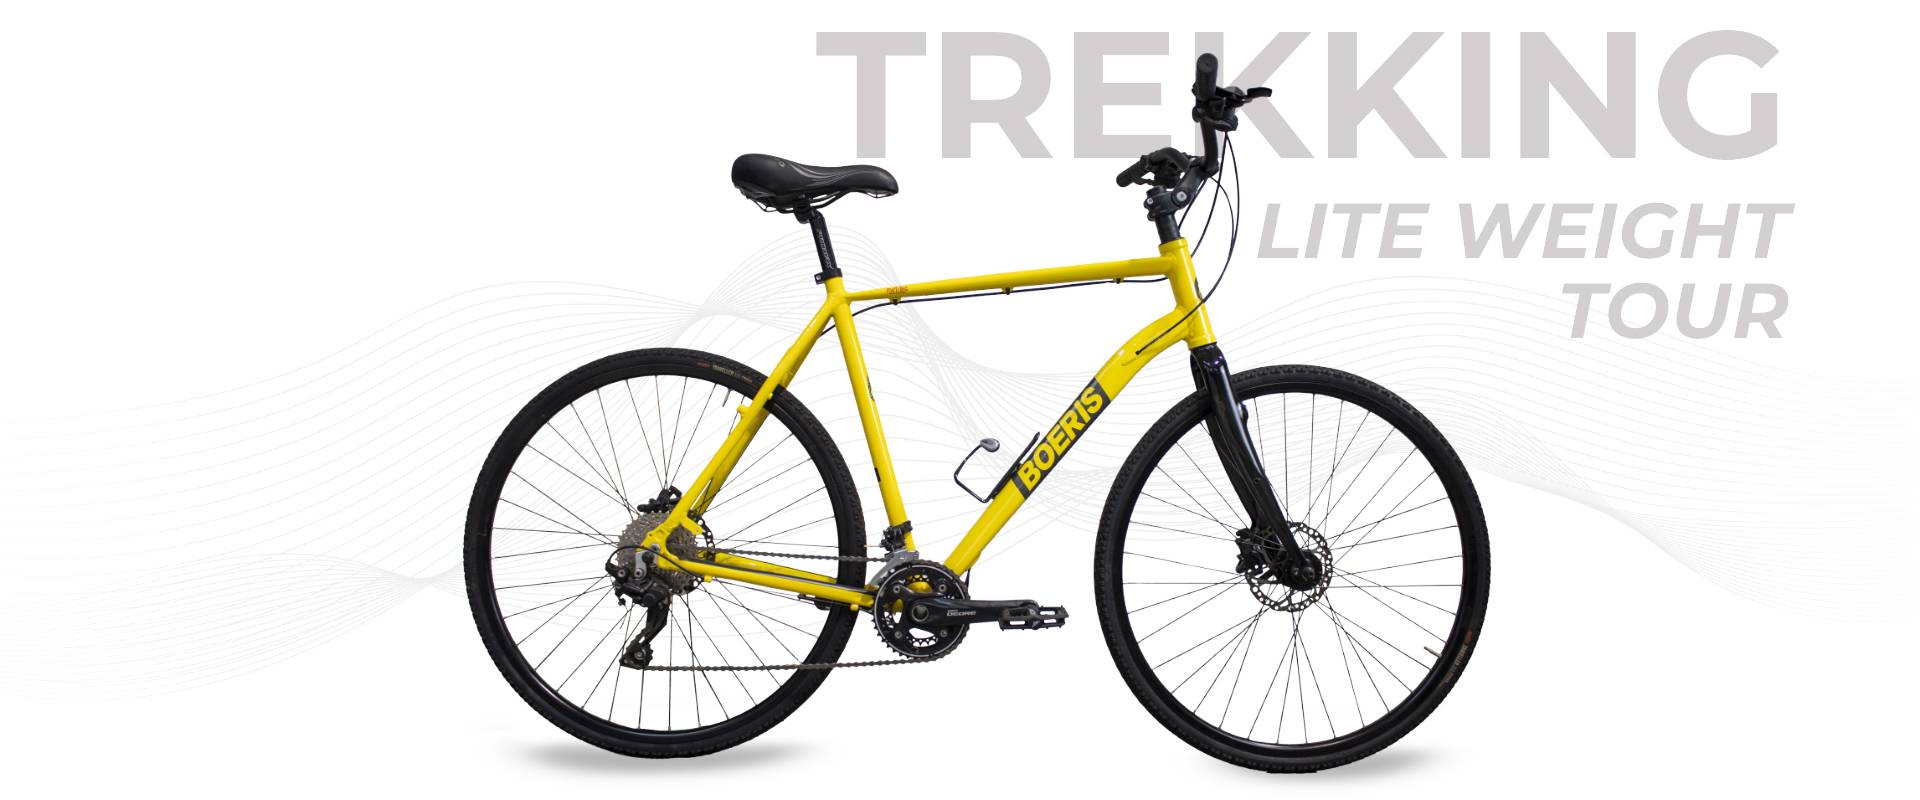 trekking bike lite weight tour Boeris Bikes Torino colore giallo